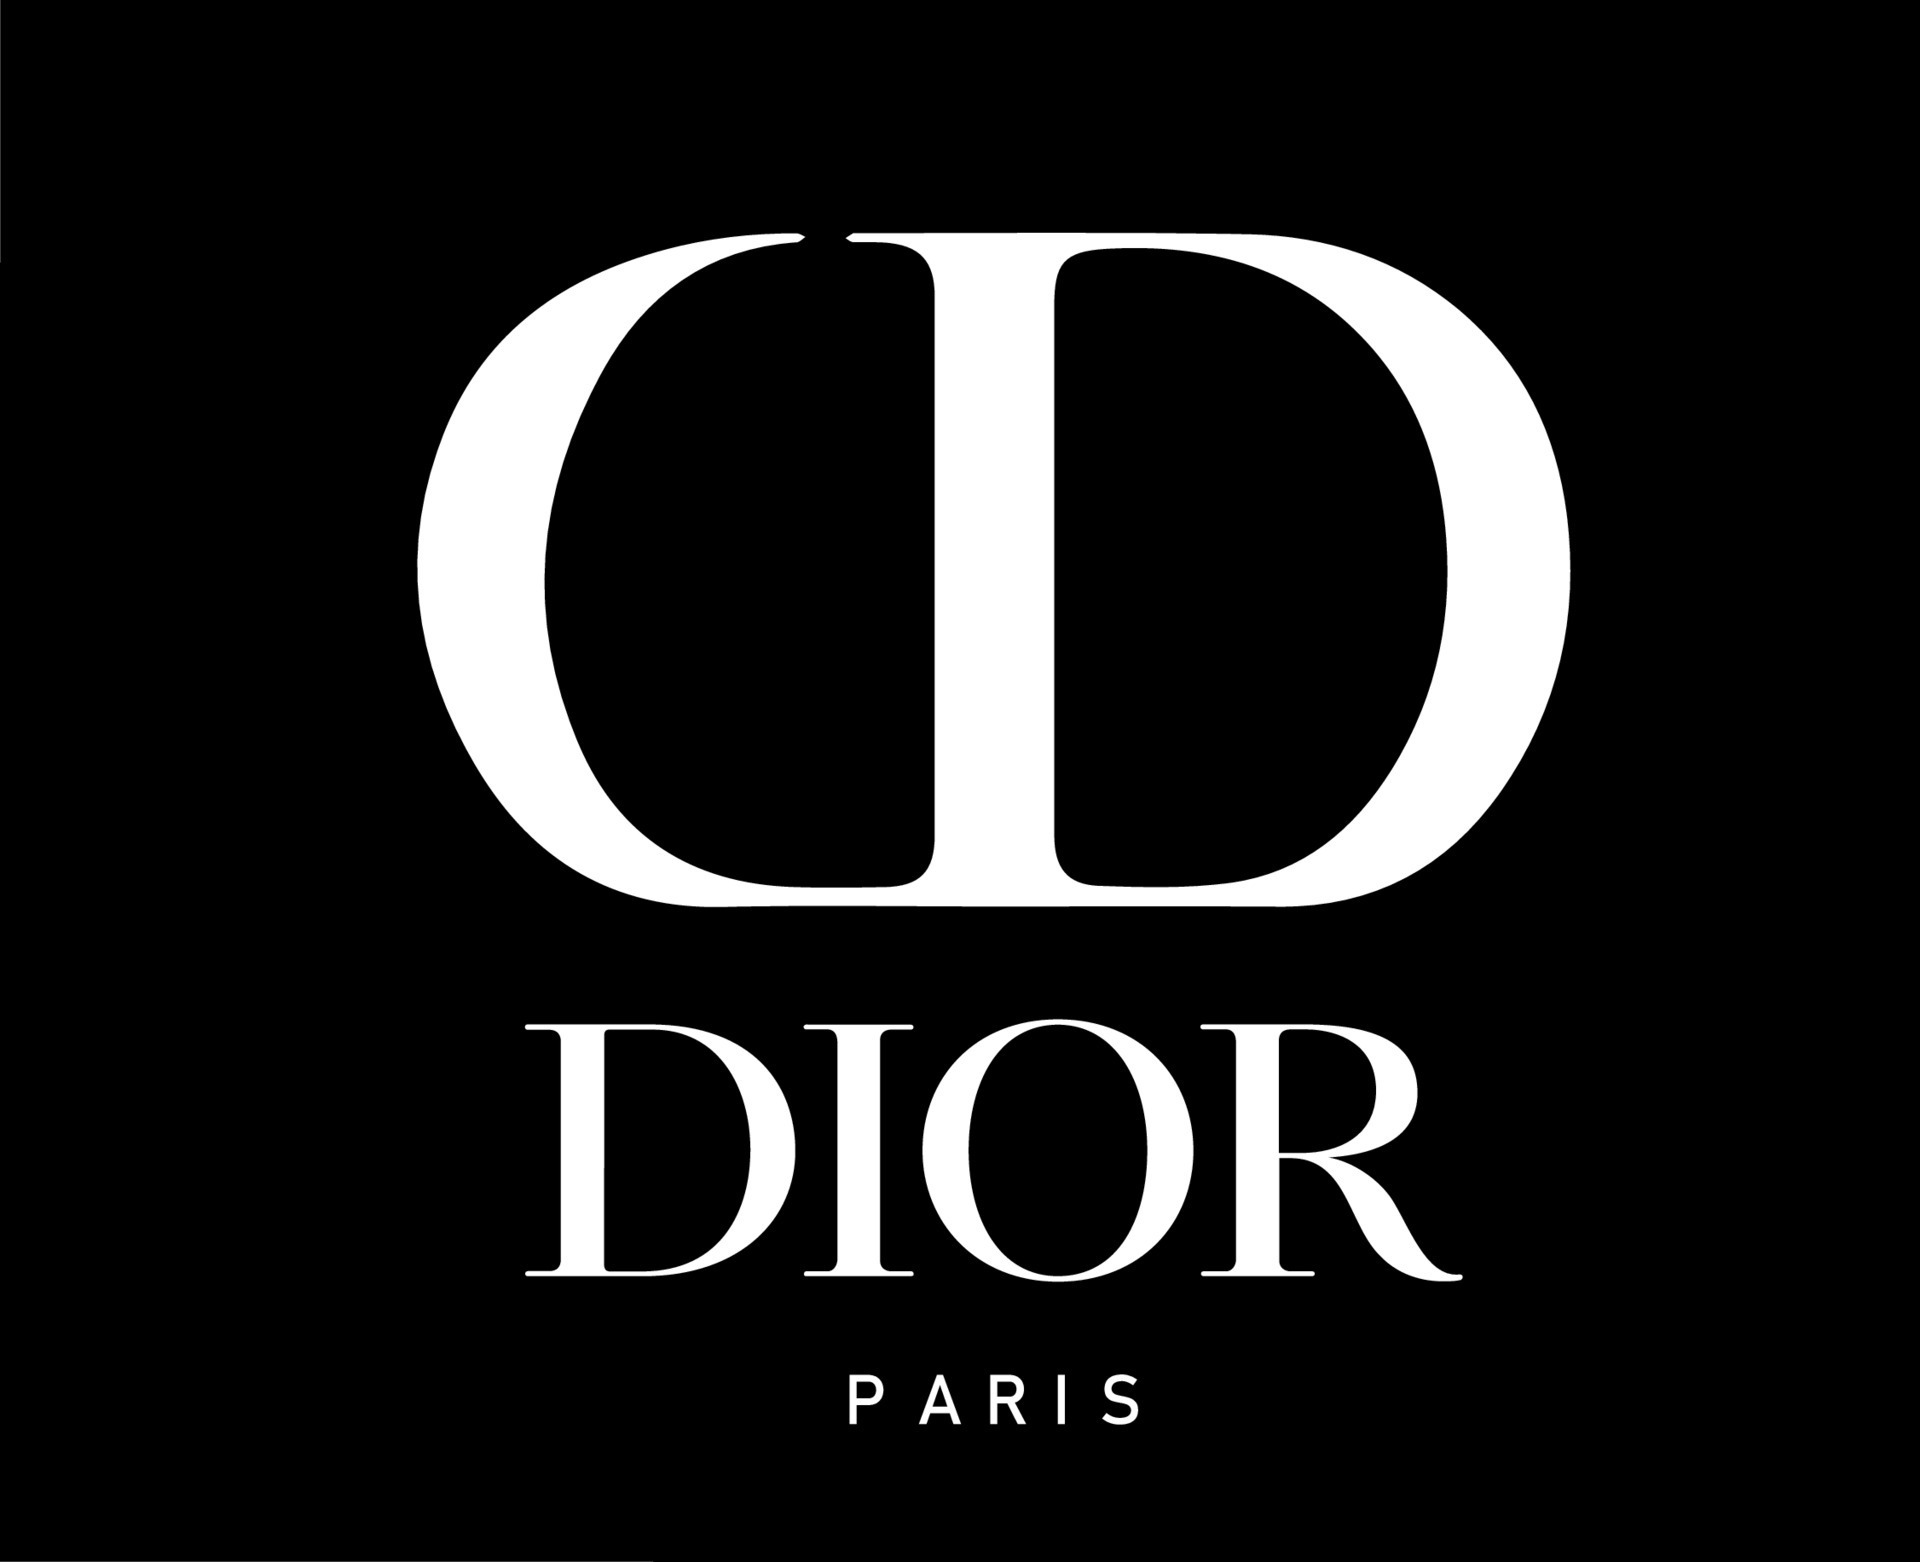 Dior Font Free Download  Fonty Fonts